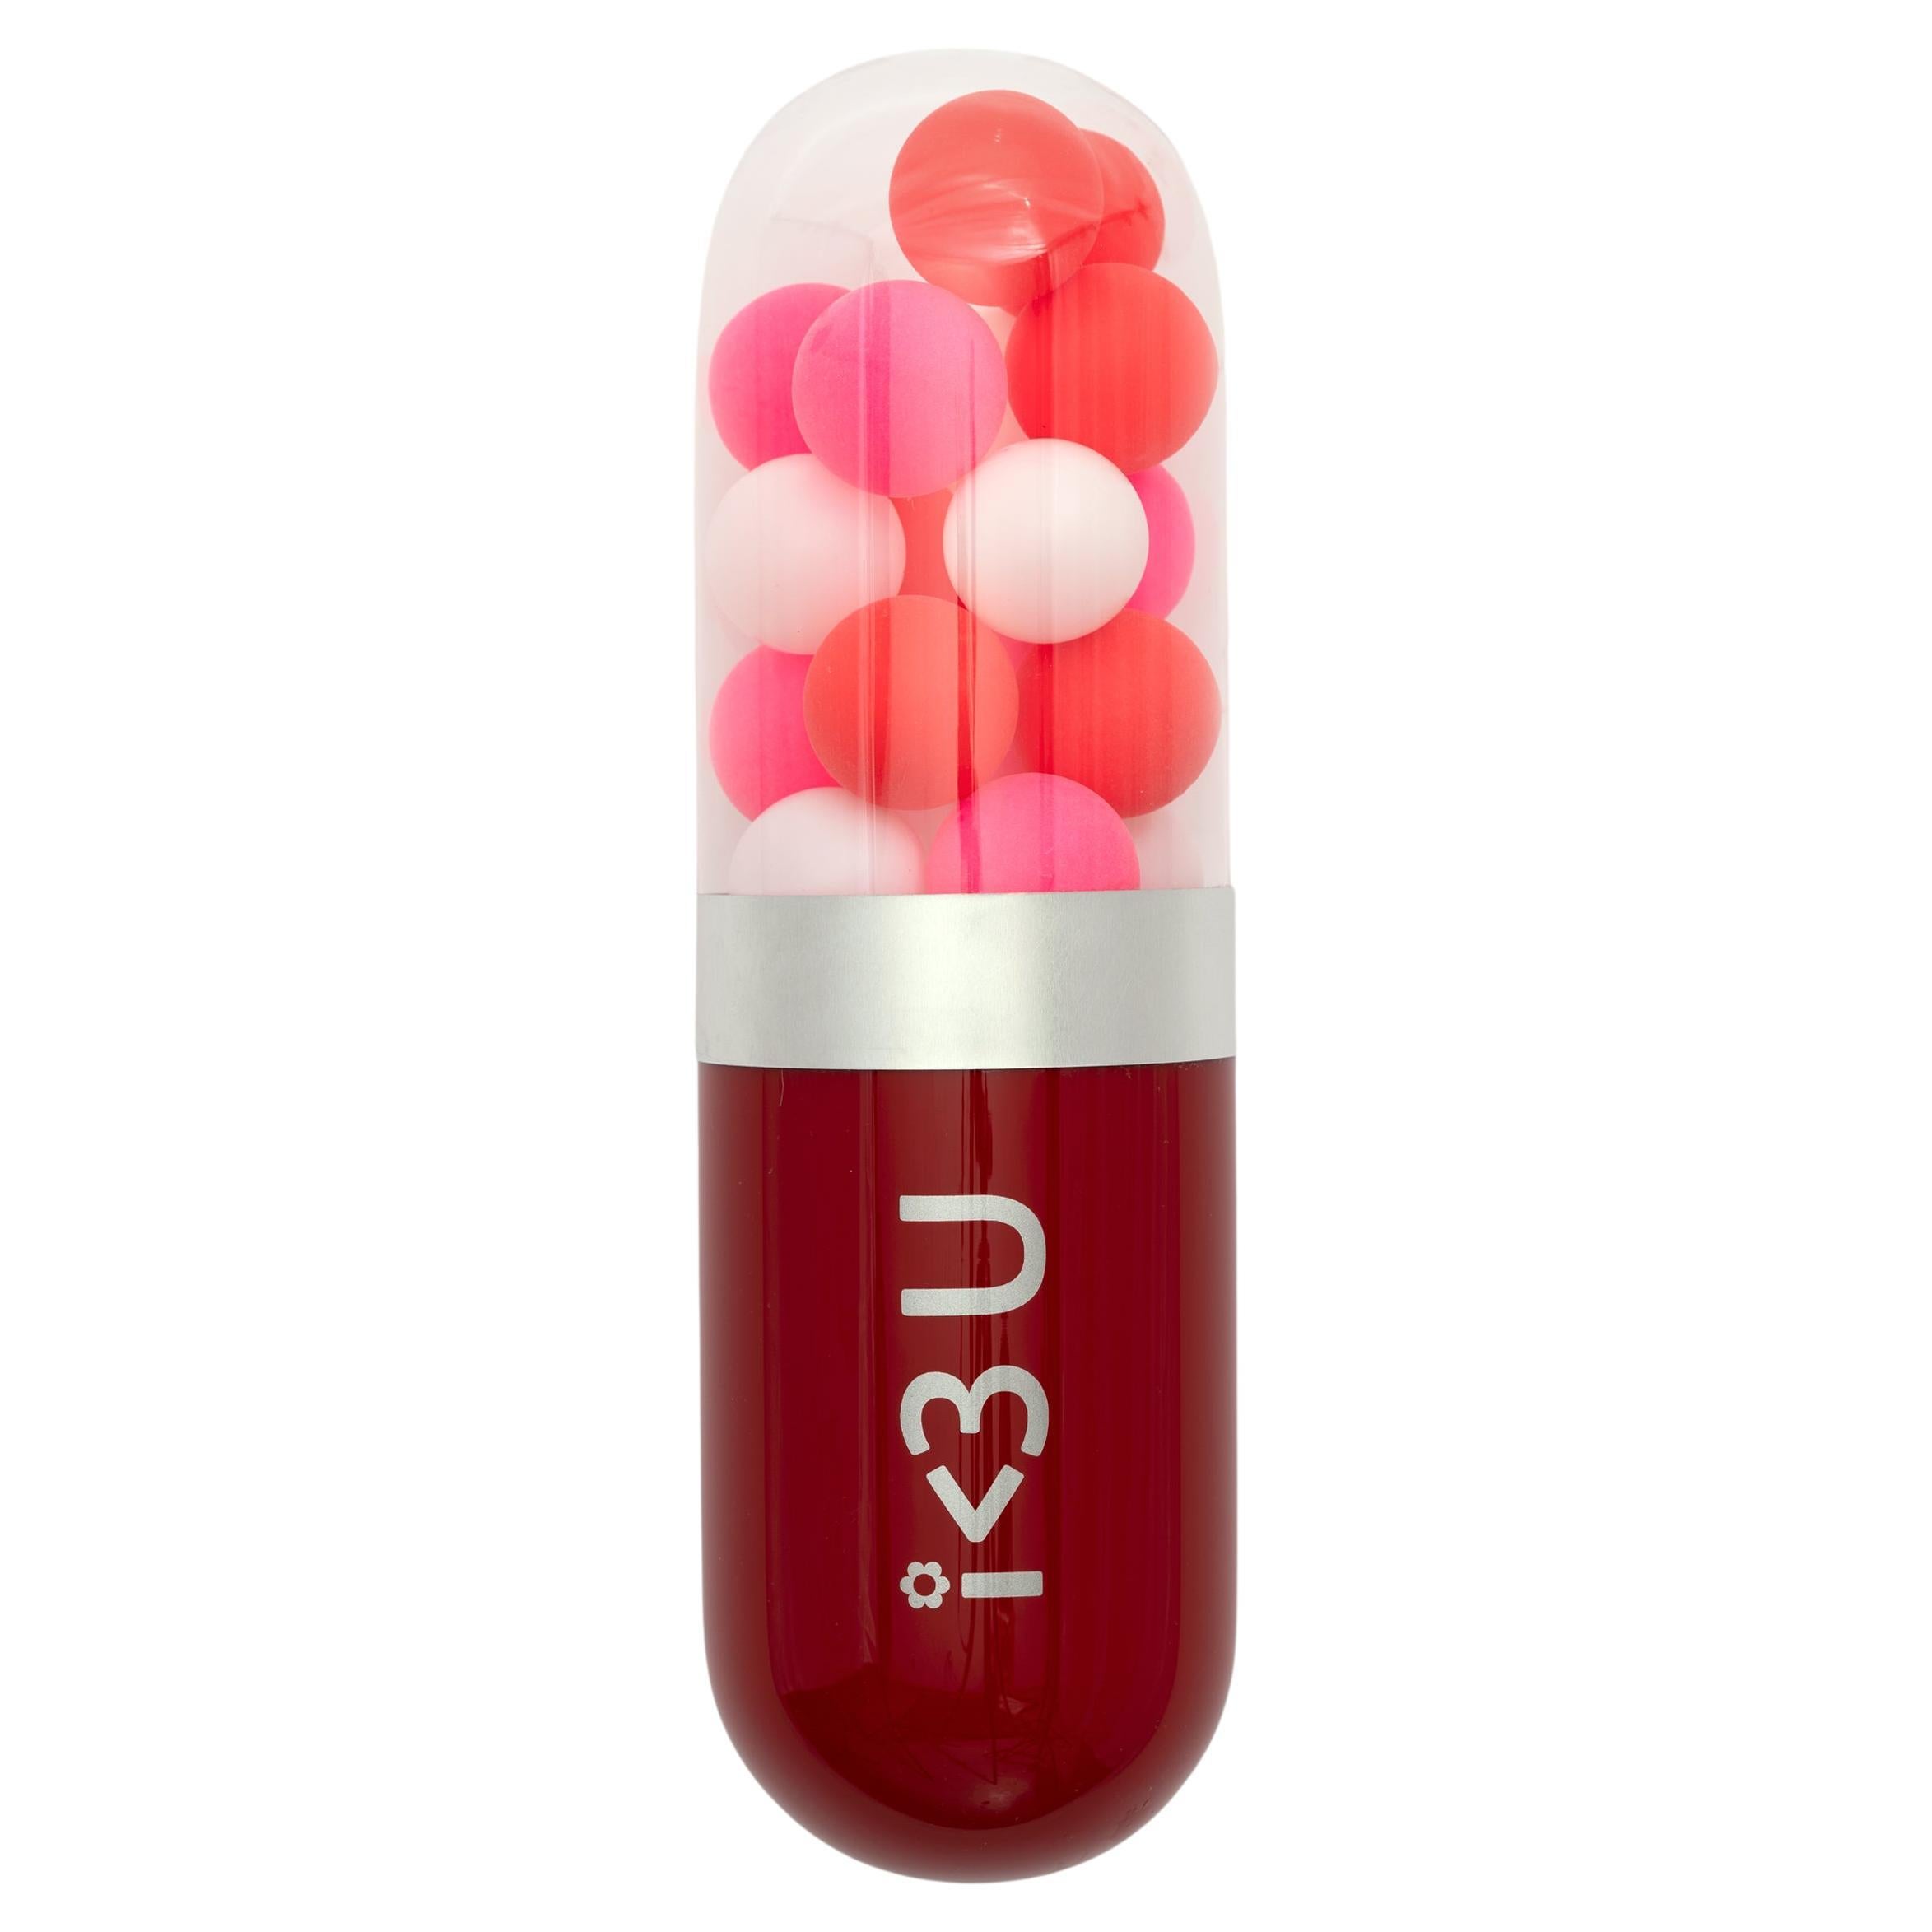 I <3 U (I Love You) - Red glass pill wall sculpture